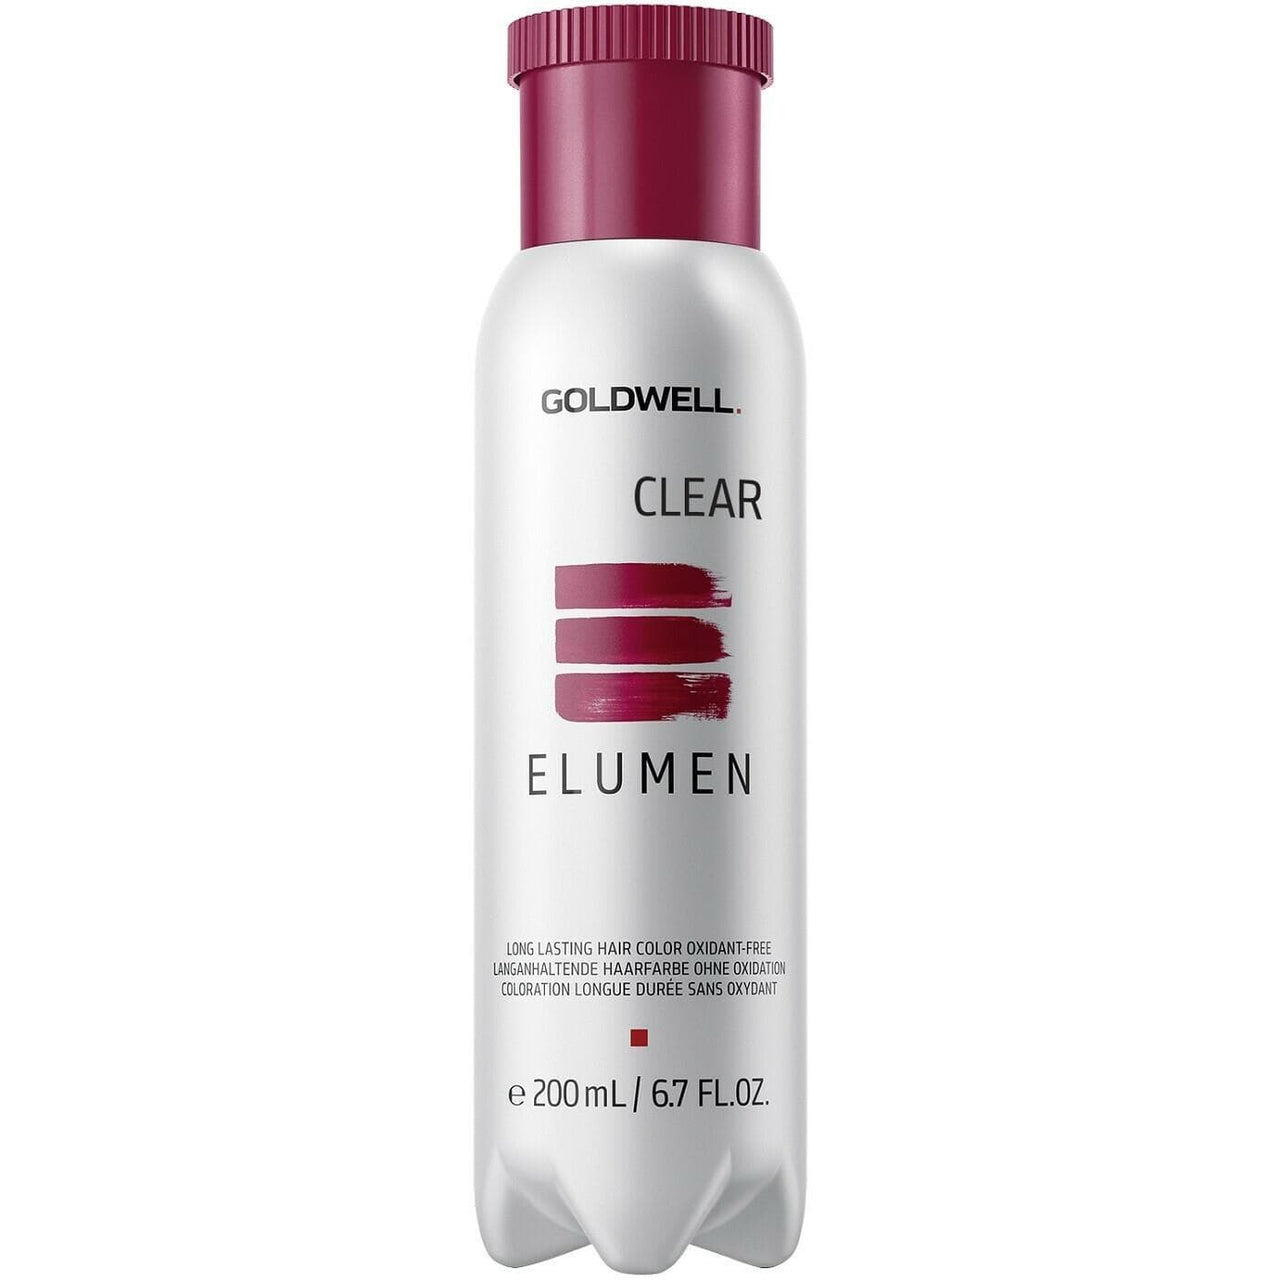 GOLDWELL - ELUMEN_Elumen Clear_Cosmetic World